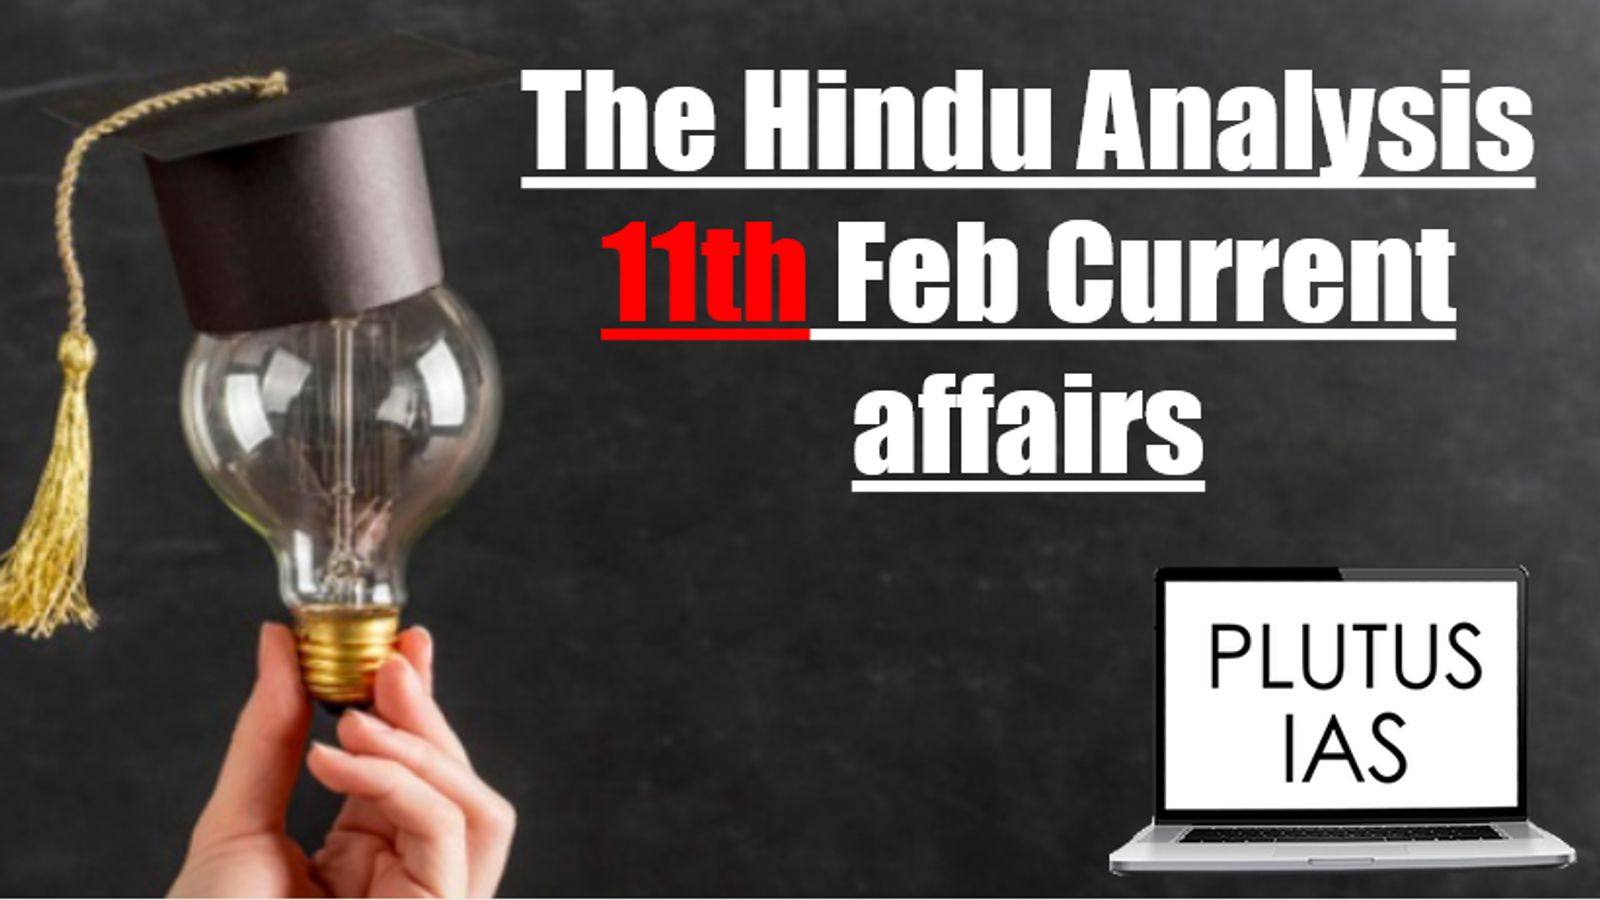 The Hindu Analysis 11th February